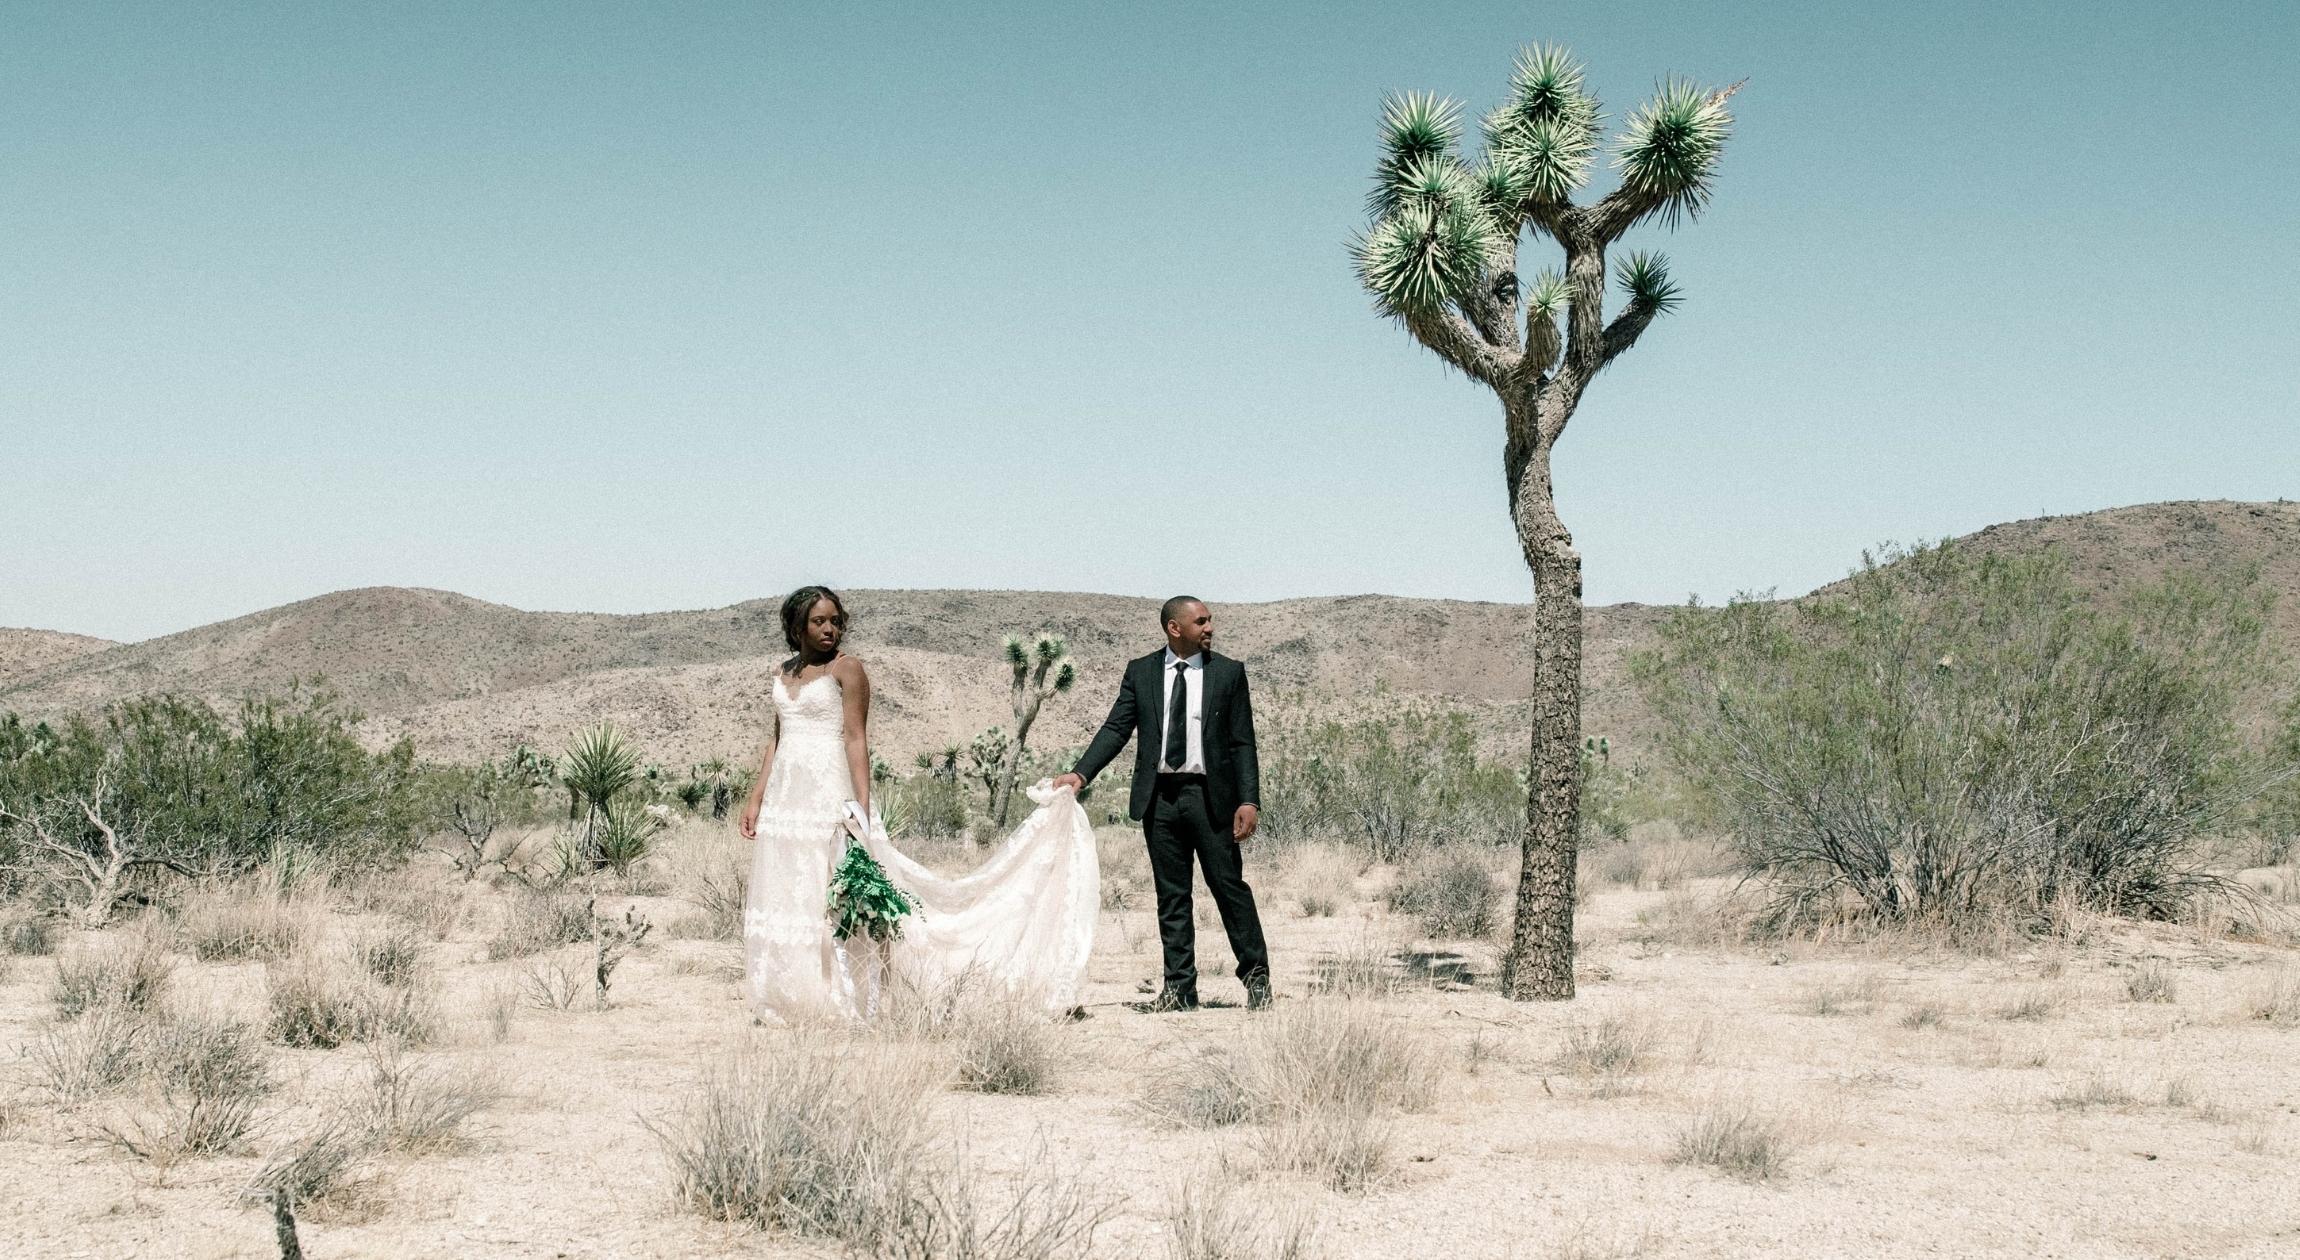 A Black couple in their wedding attire in a desert